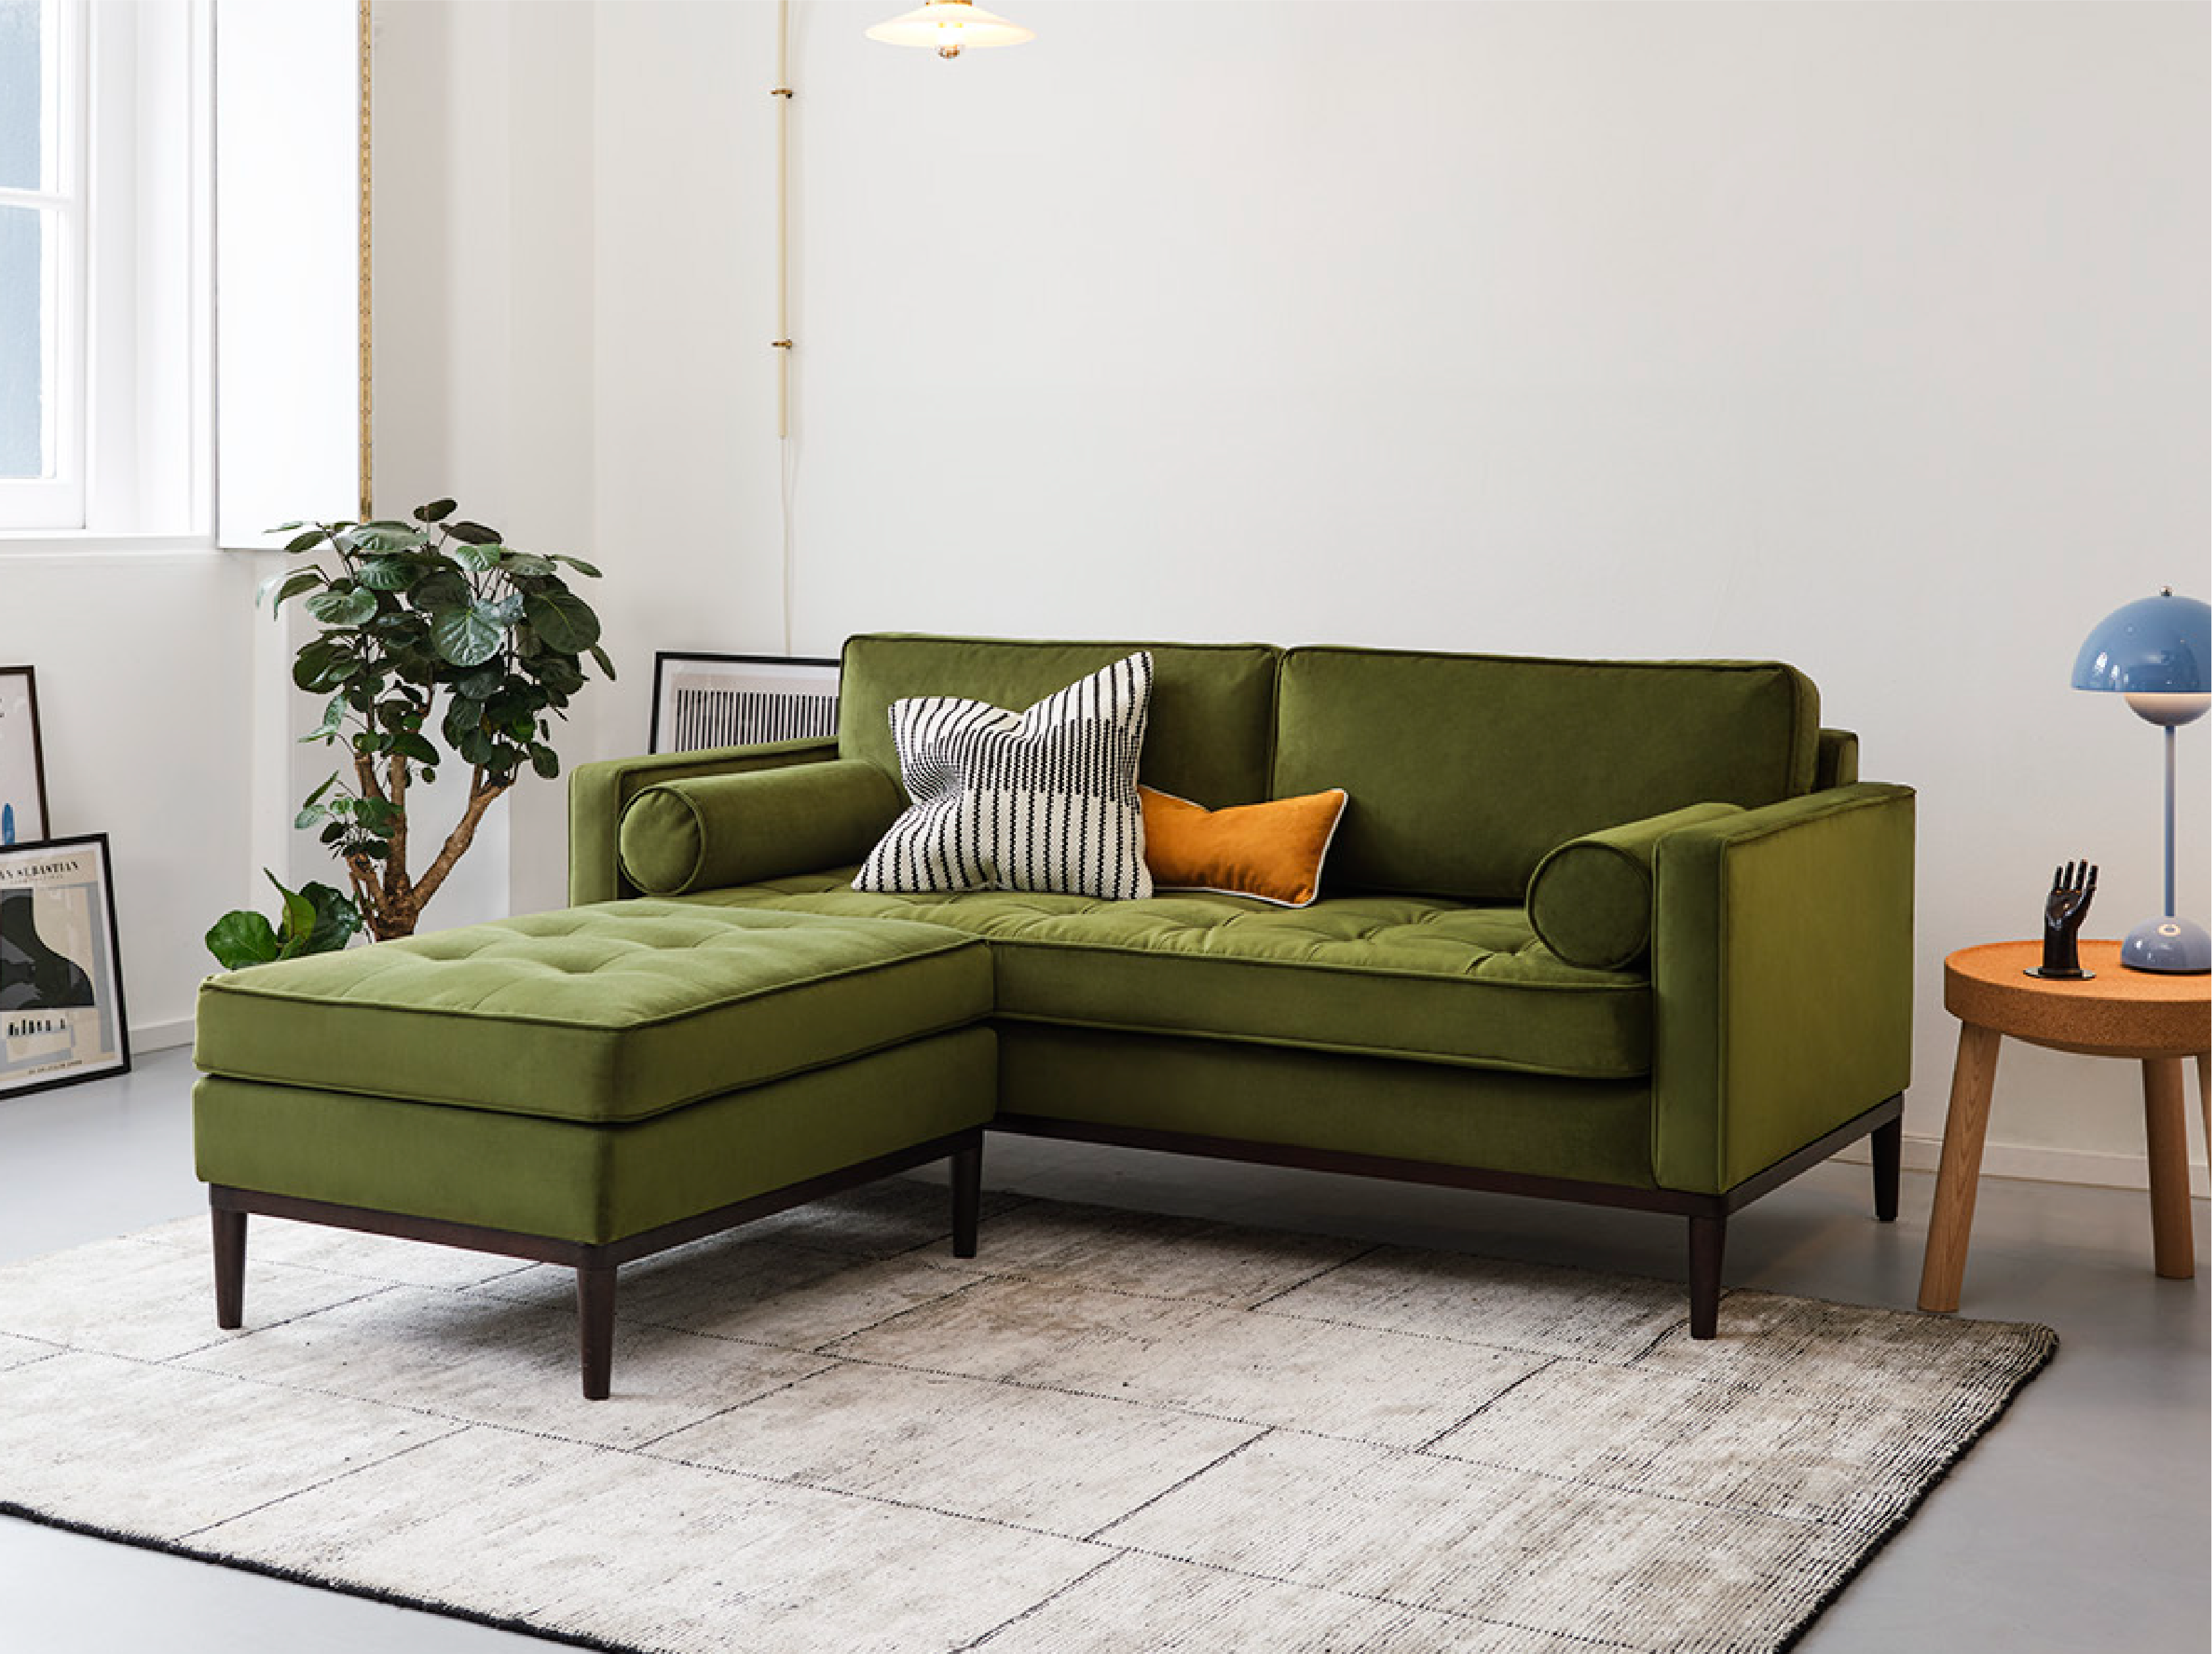 Velvet upholstered ottoman with matching green sofa